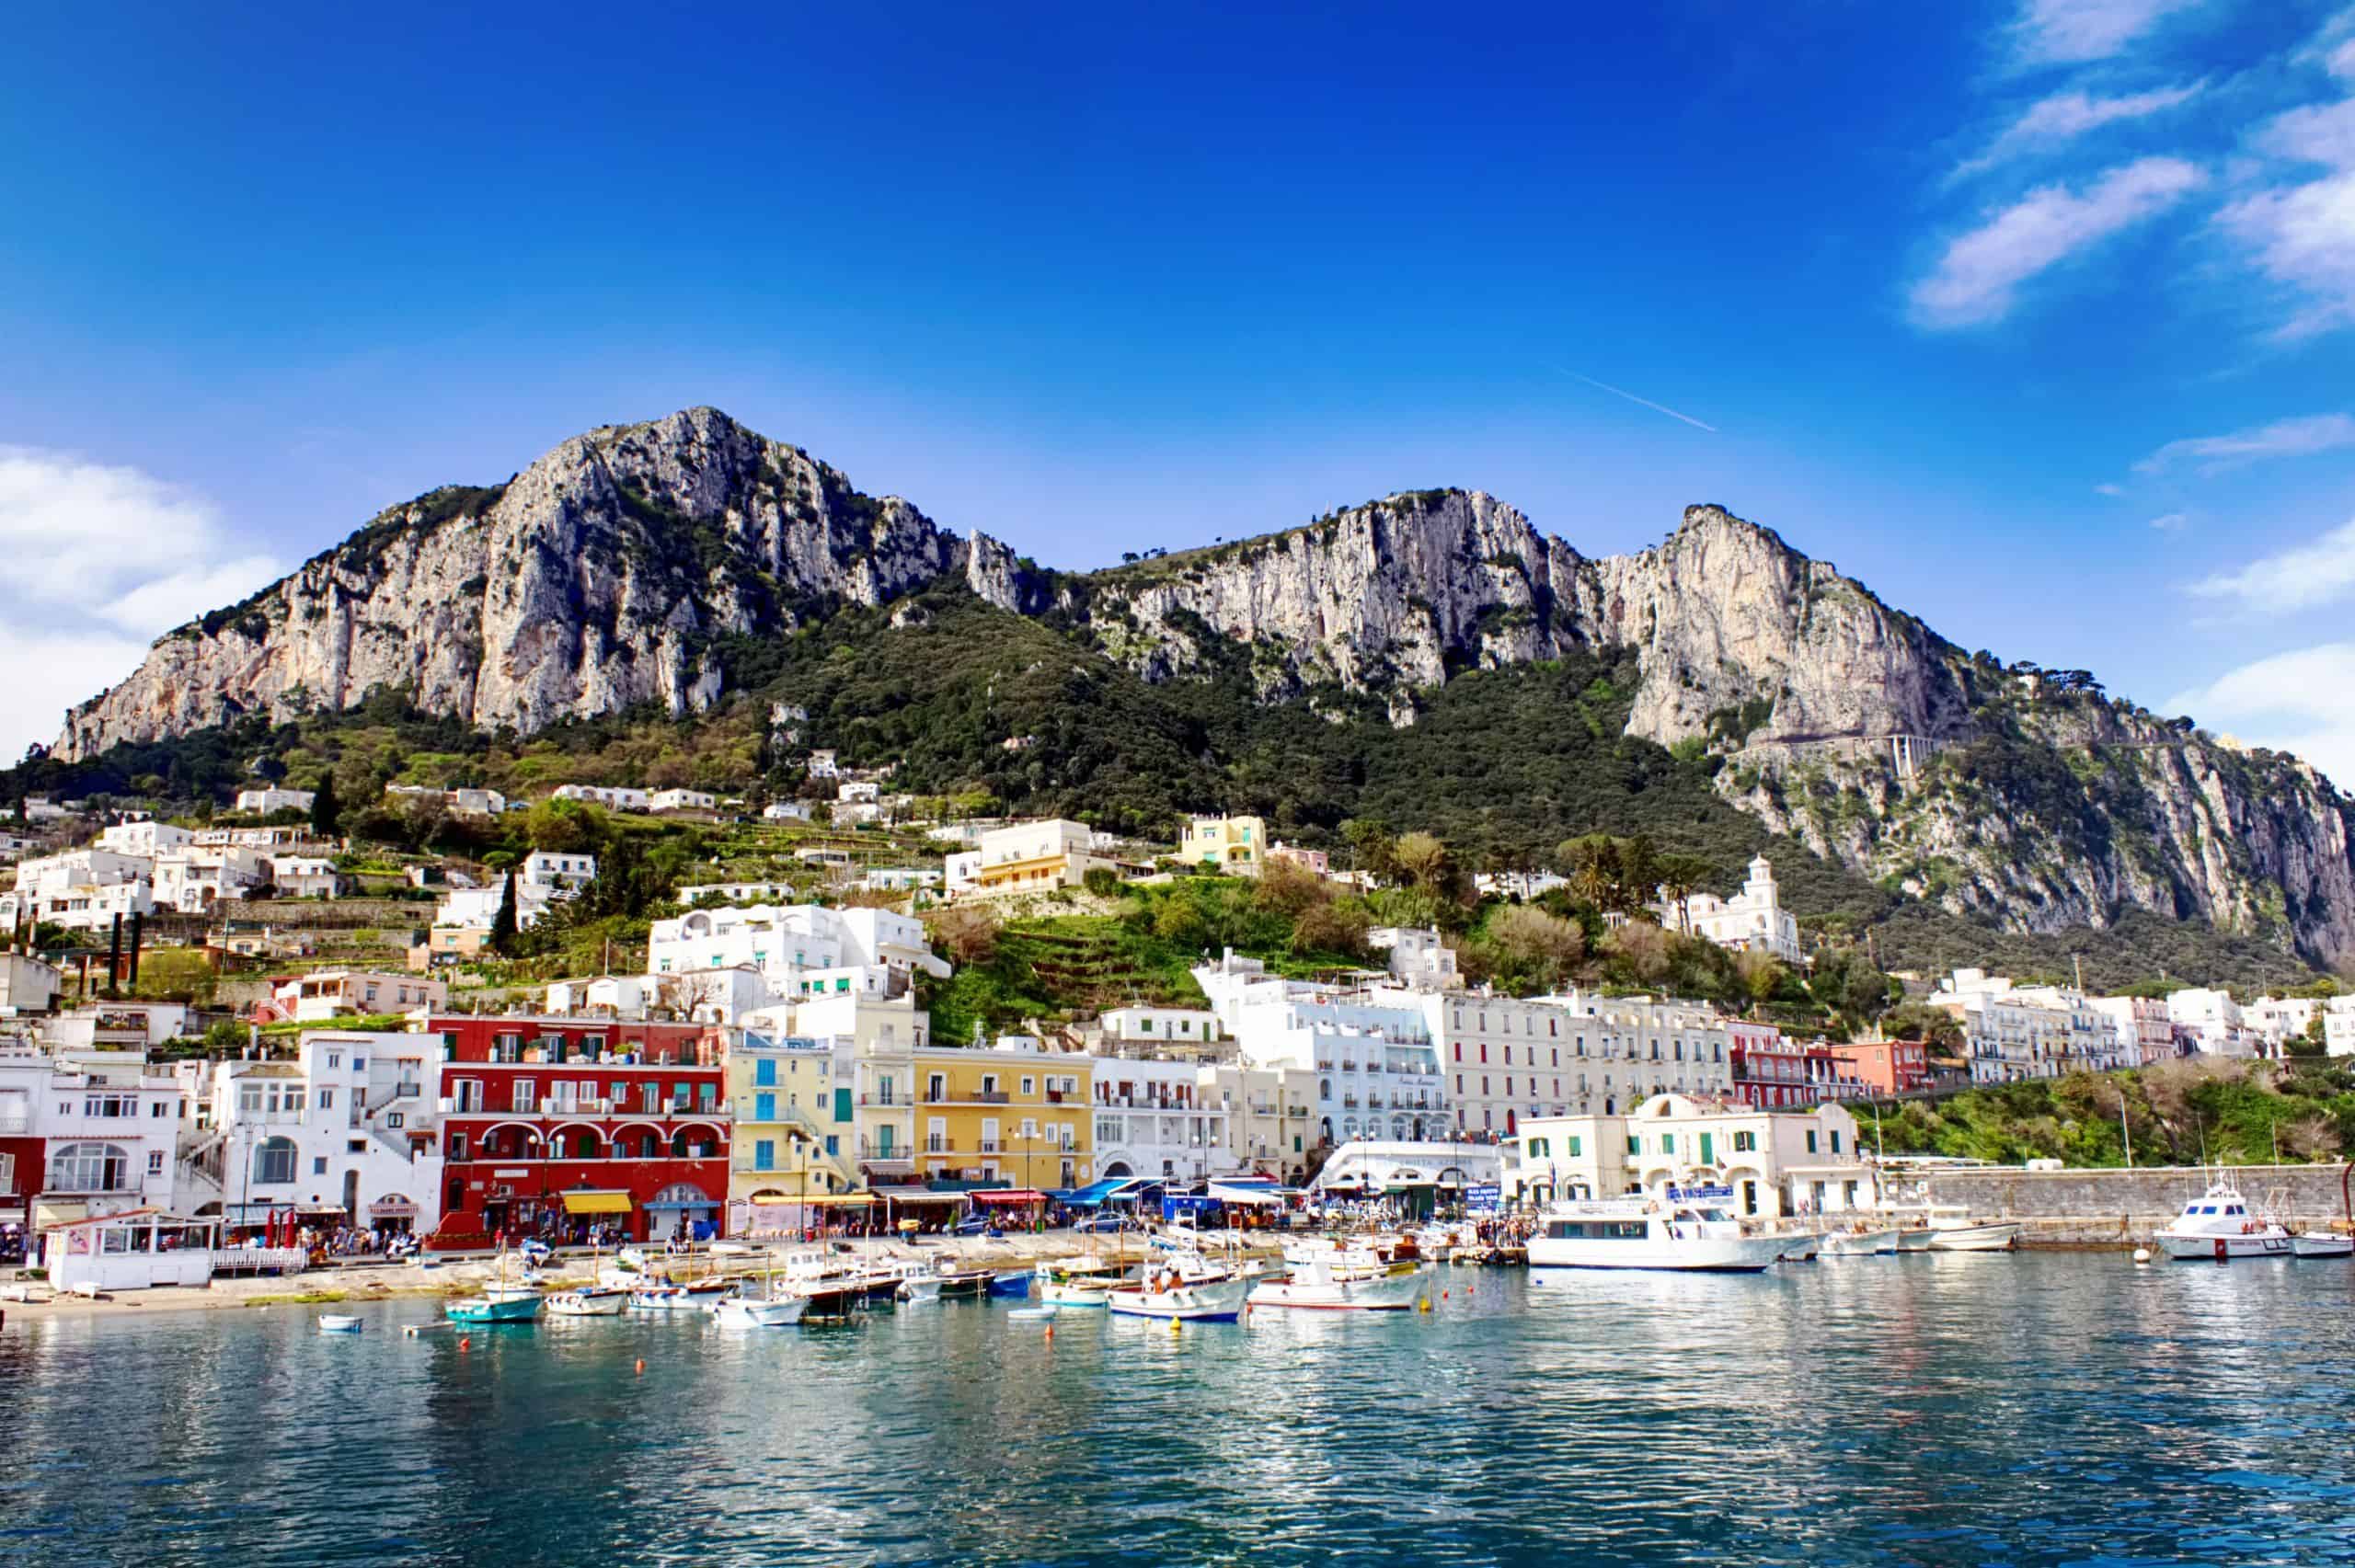 Day 6 and 7: Capri 